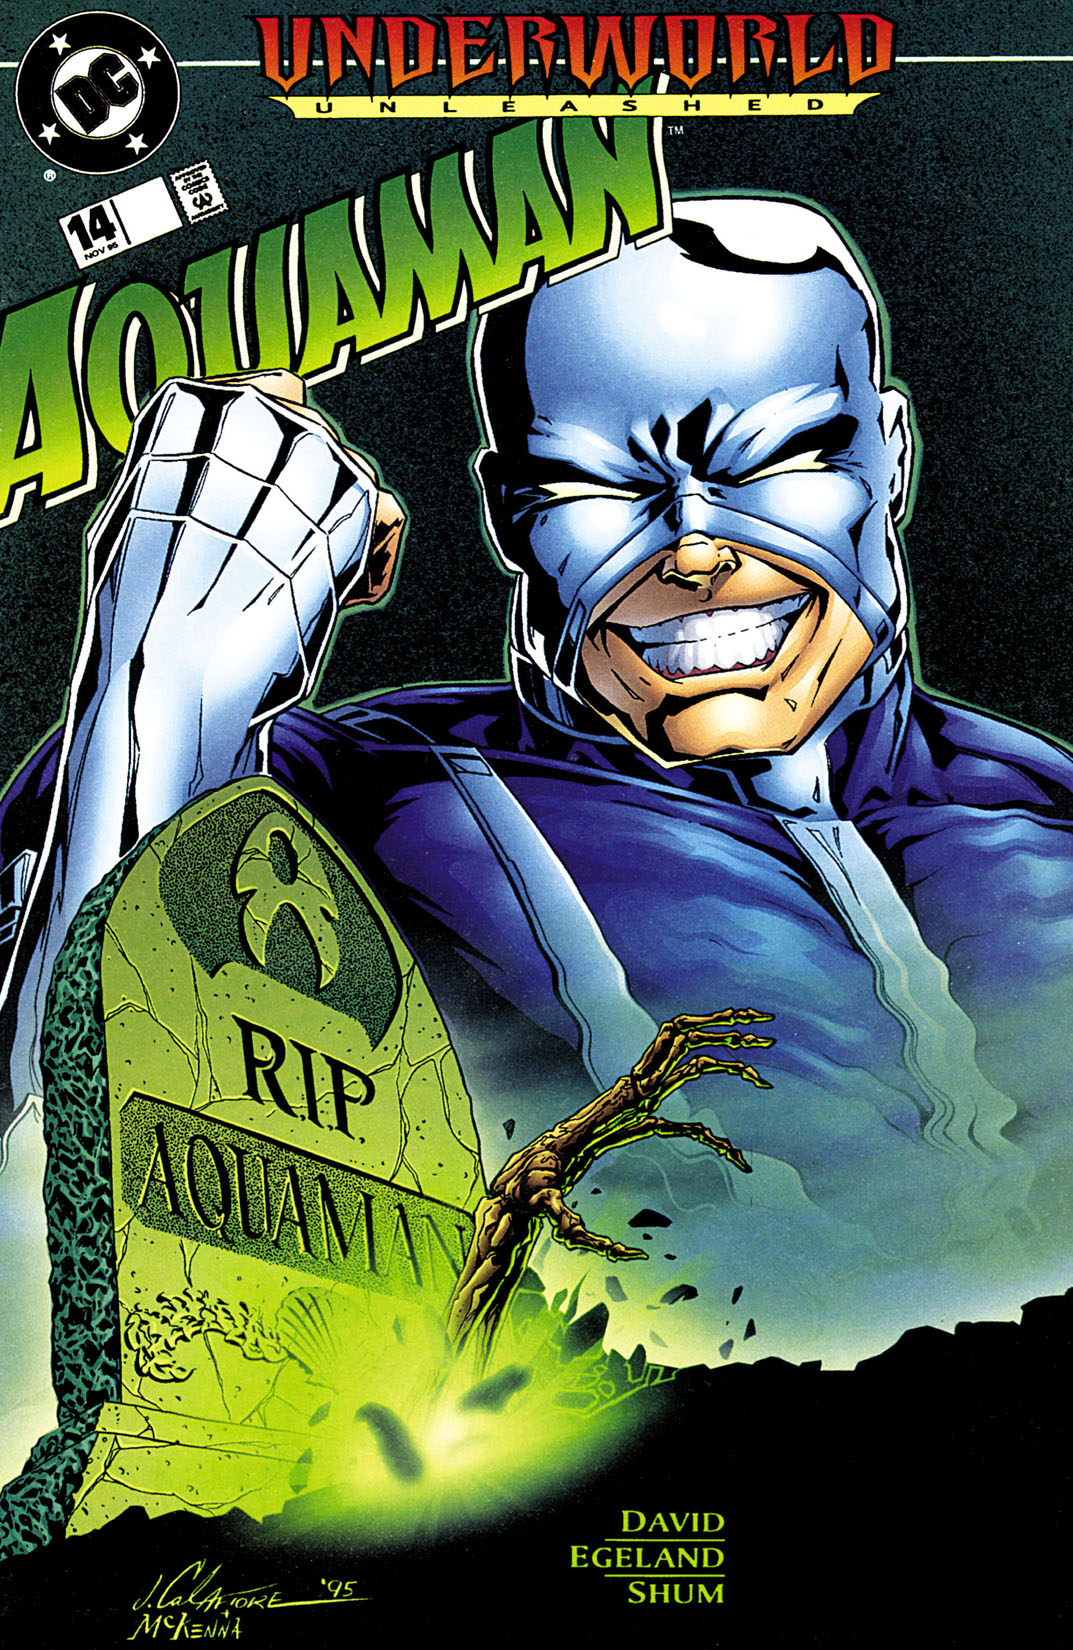 Aquaman (1994-) #14 preview images